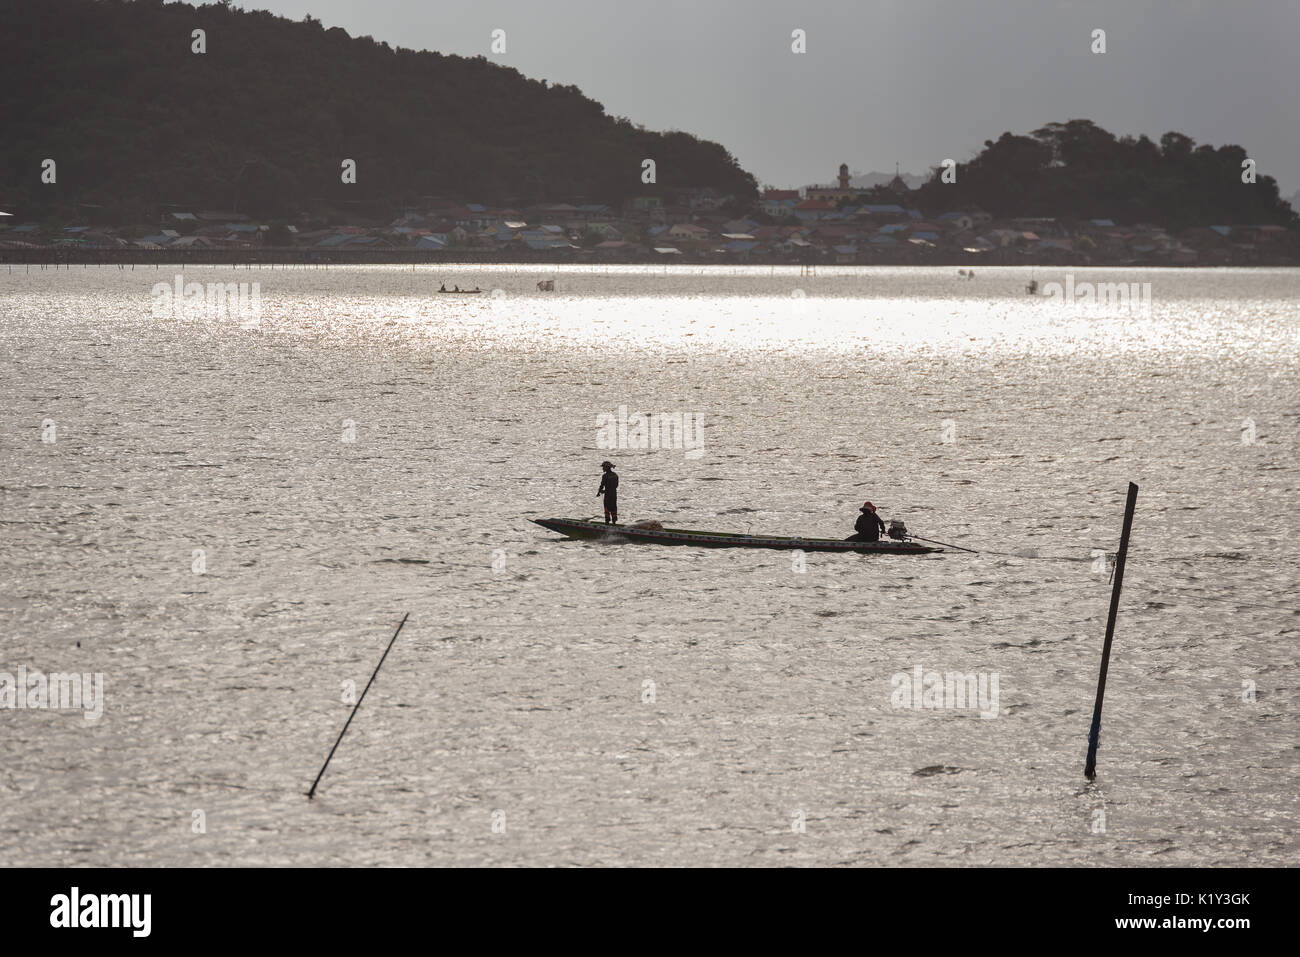 SONGKHLA THAILANDIA - 18 febbraio: due pescatori vela una barca per la pesca in lago Songkhla il 18 febbraio 2017 in Songkhla, Thailandia. Foto Stock